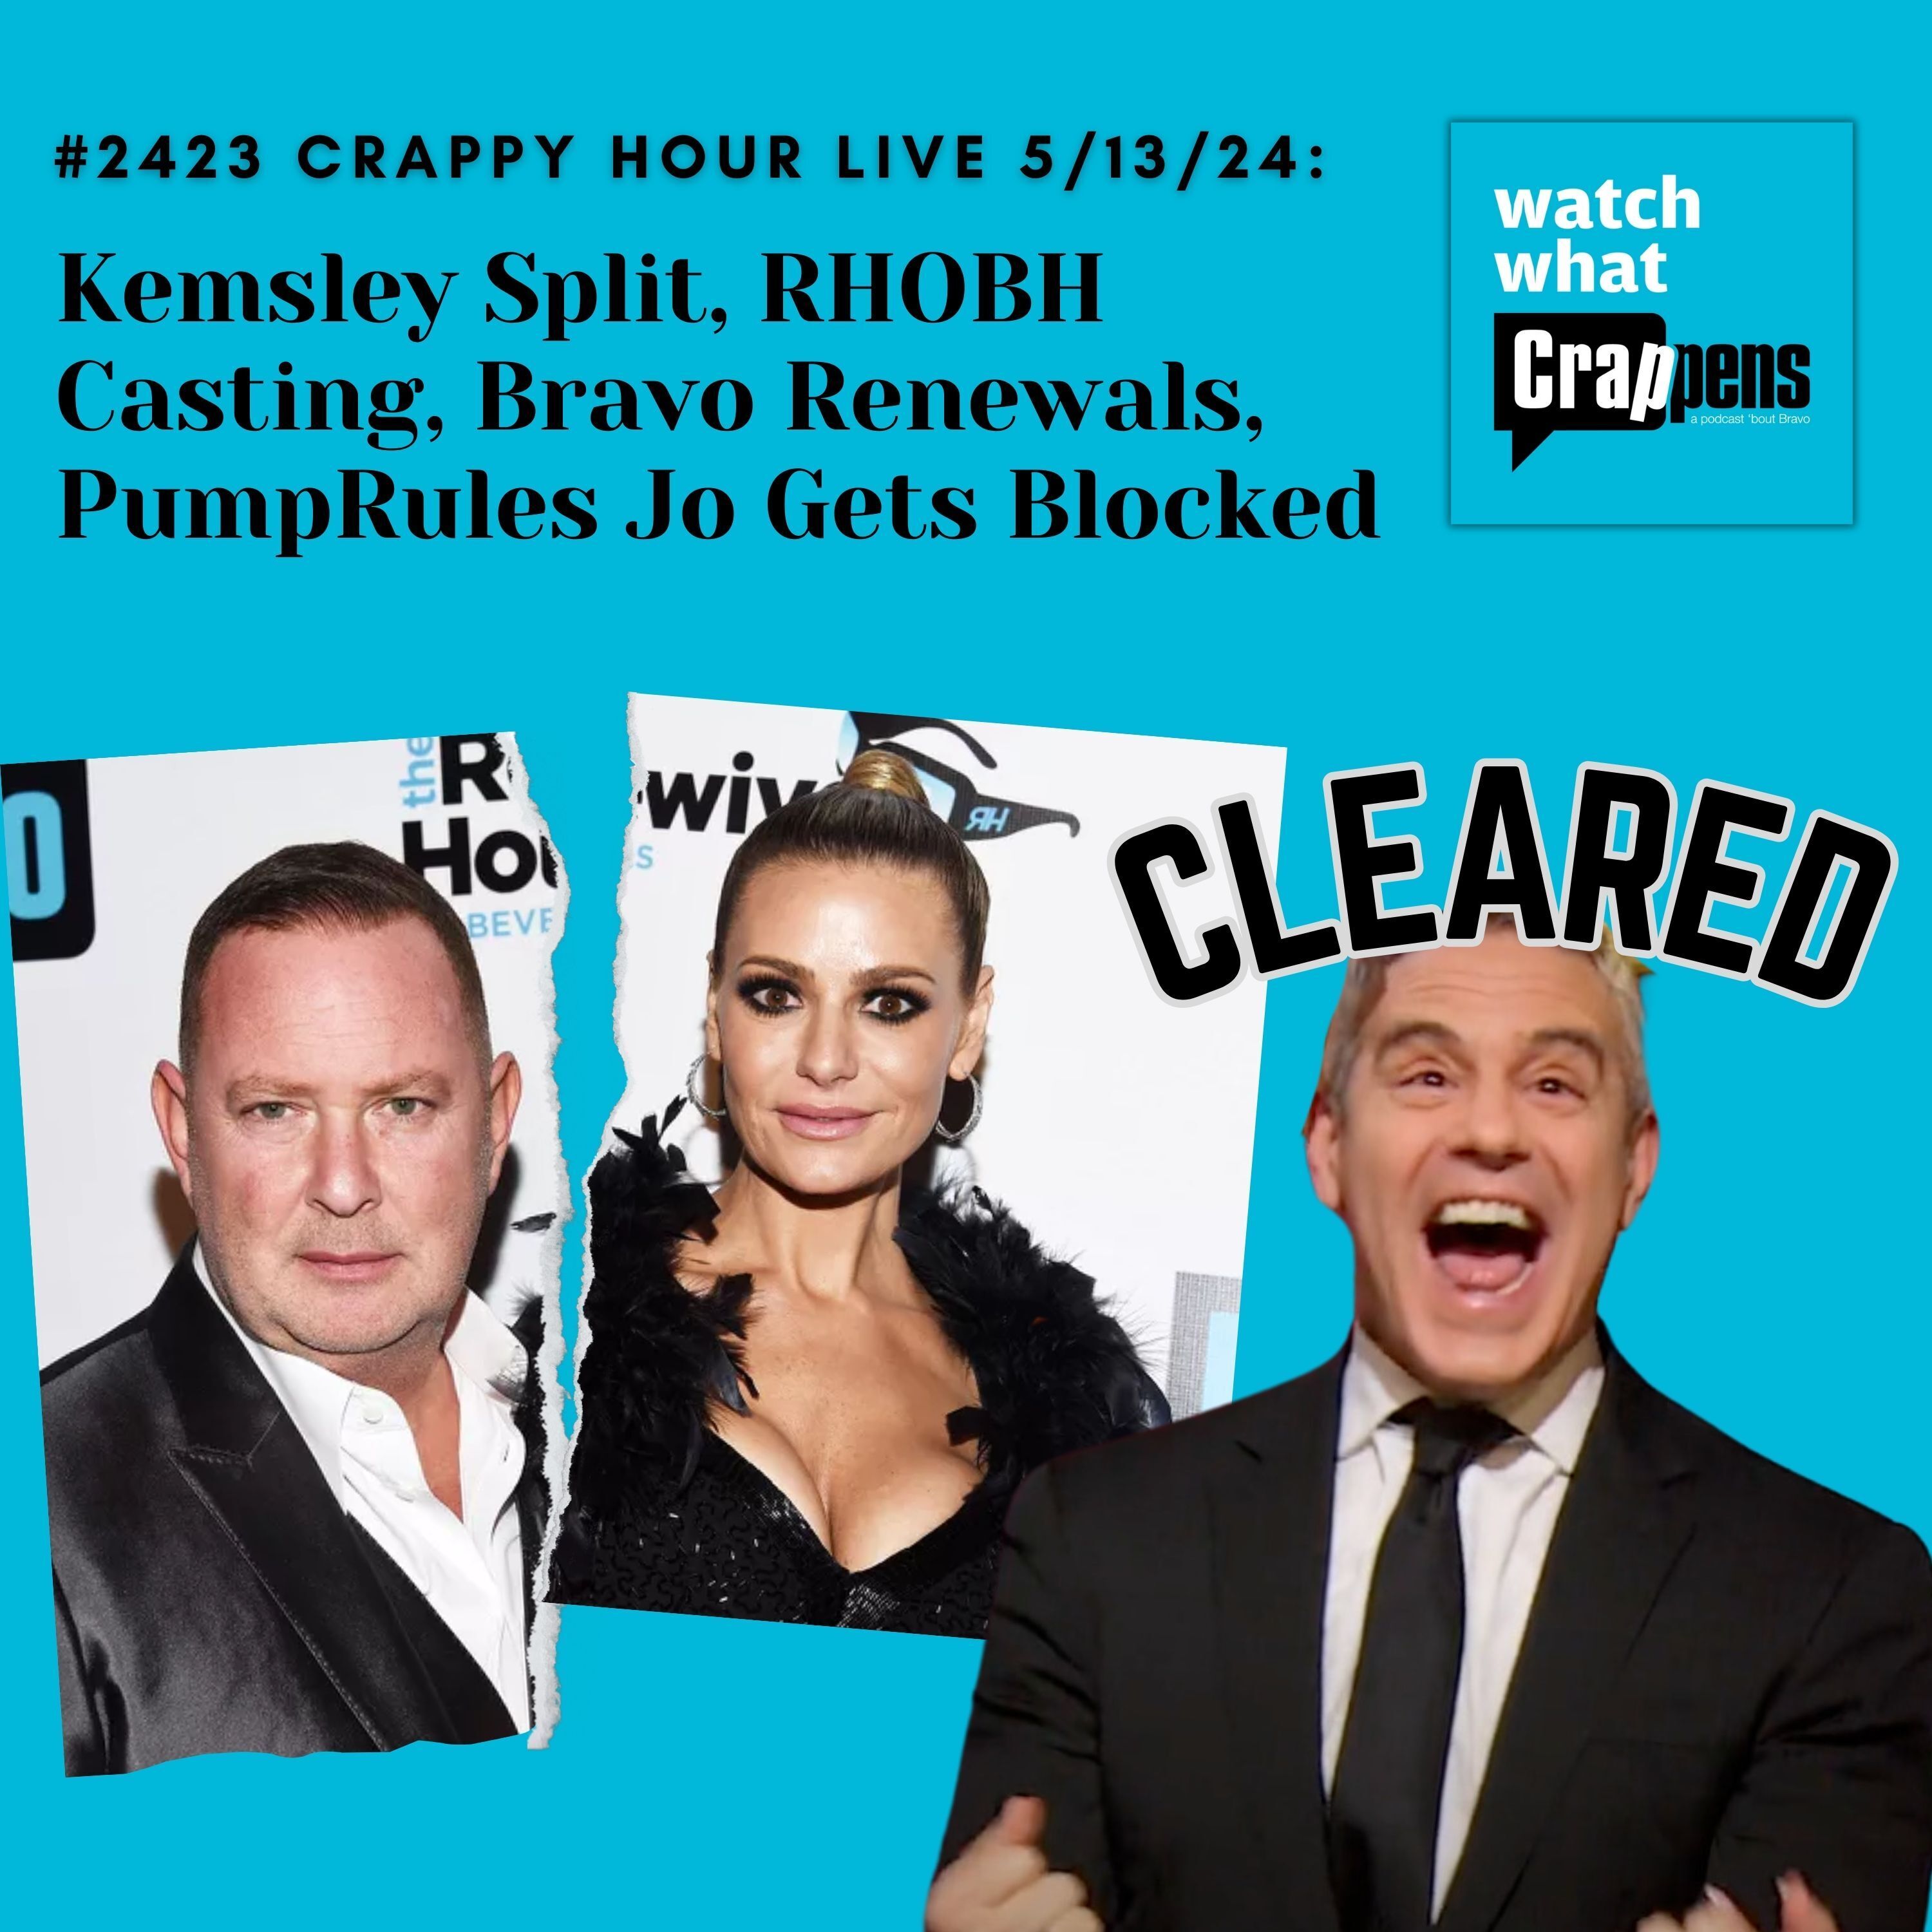 #2423 Crappy Hour Live 5/13/24: Kemsley Split, RHOBH Casting, Bravo Renewals, PumpRules Jo Gets Blocked